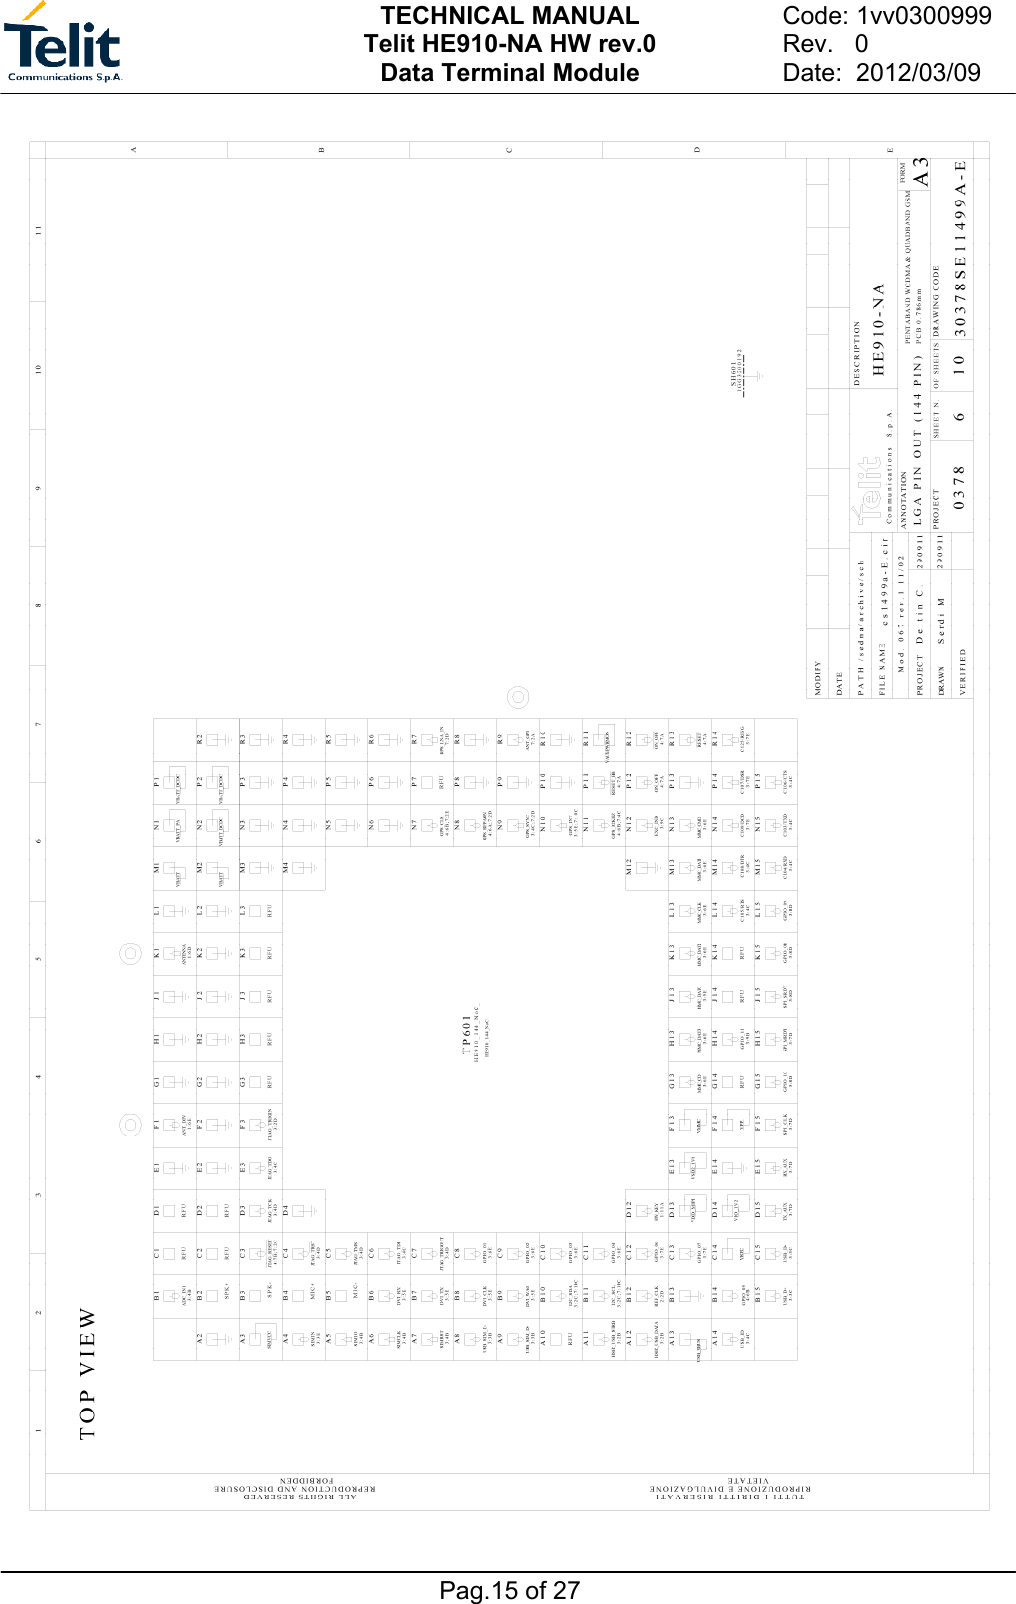 TECHNICAL MANUAL Telit HE910-NA HW rev.0 Data Terminal Module   Pag.15 of 27 Code: 1vv0300999    Rev.   0  Date:  2012/03/09   